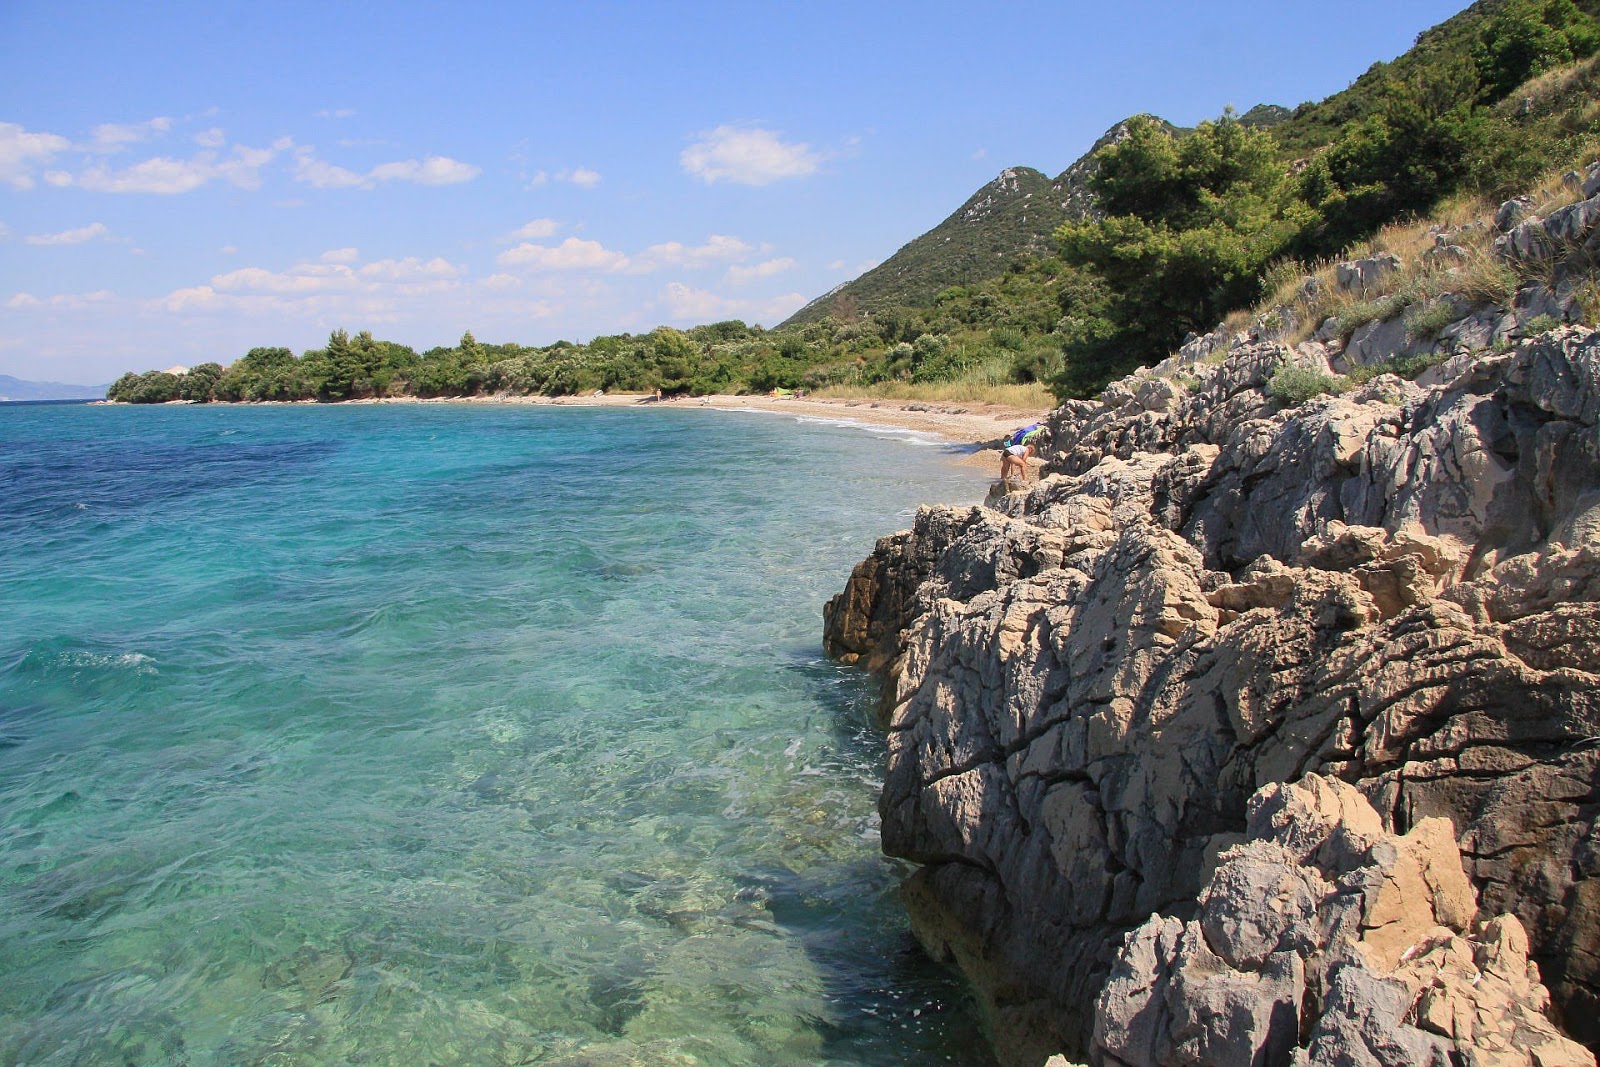 Photo of Salpa beach with brown pebble surface